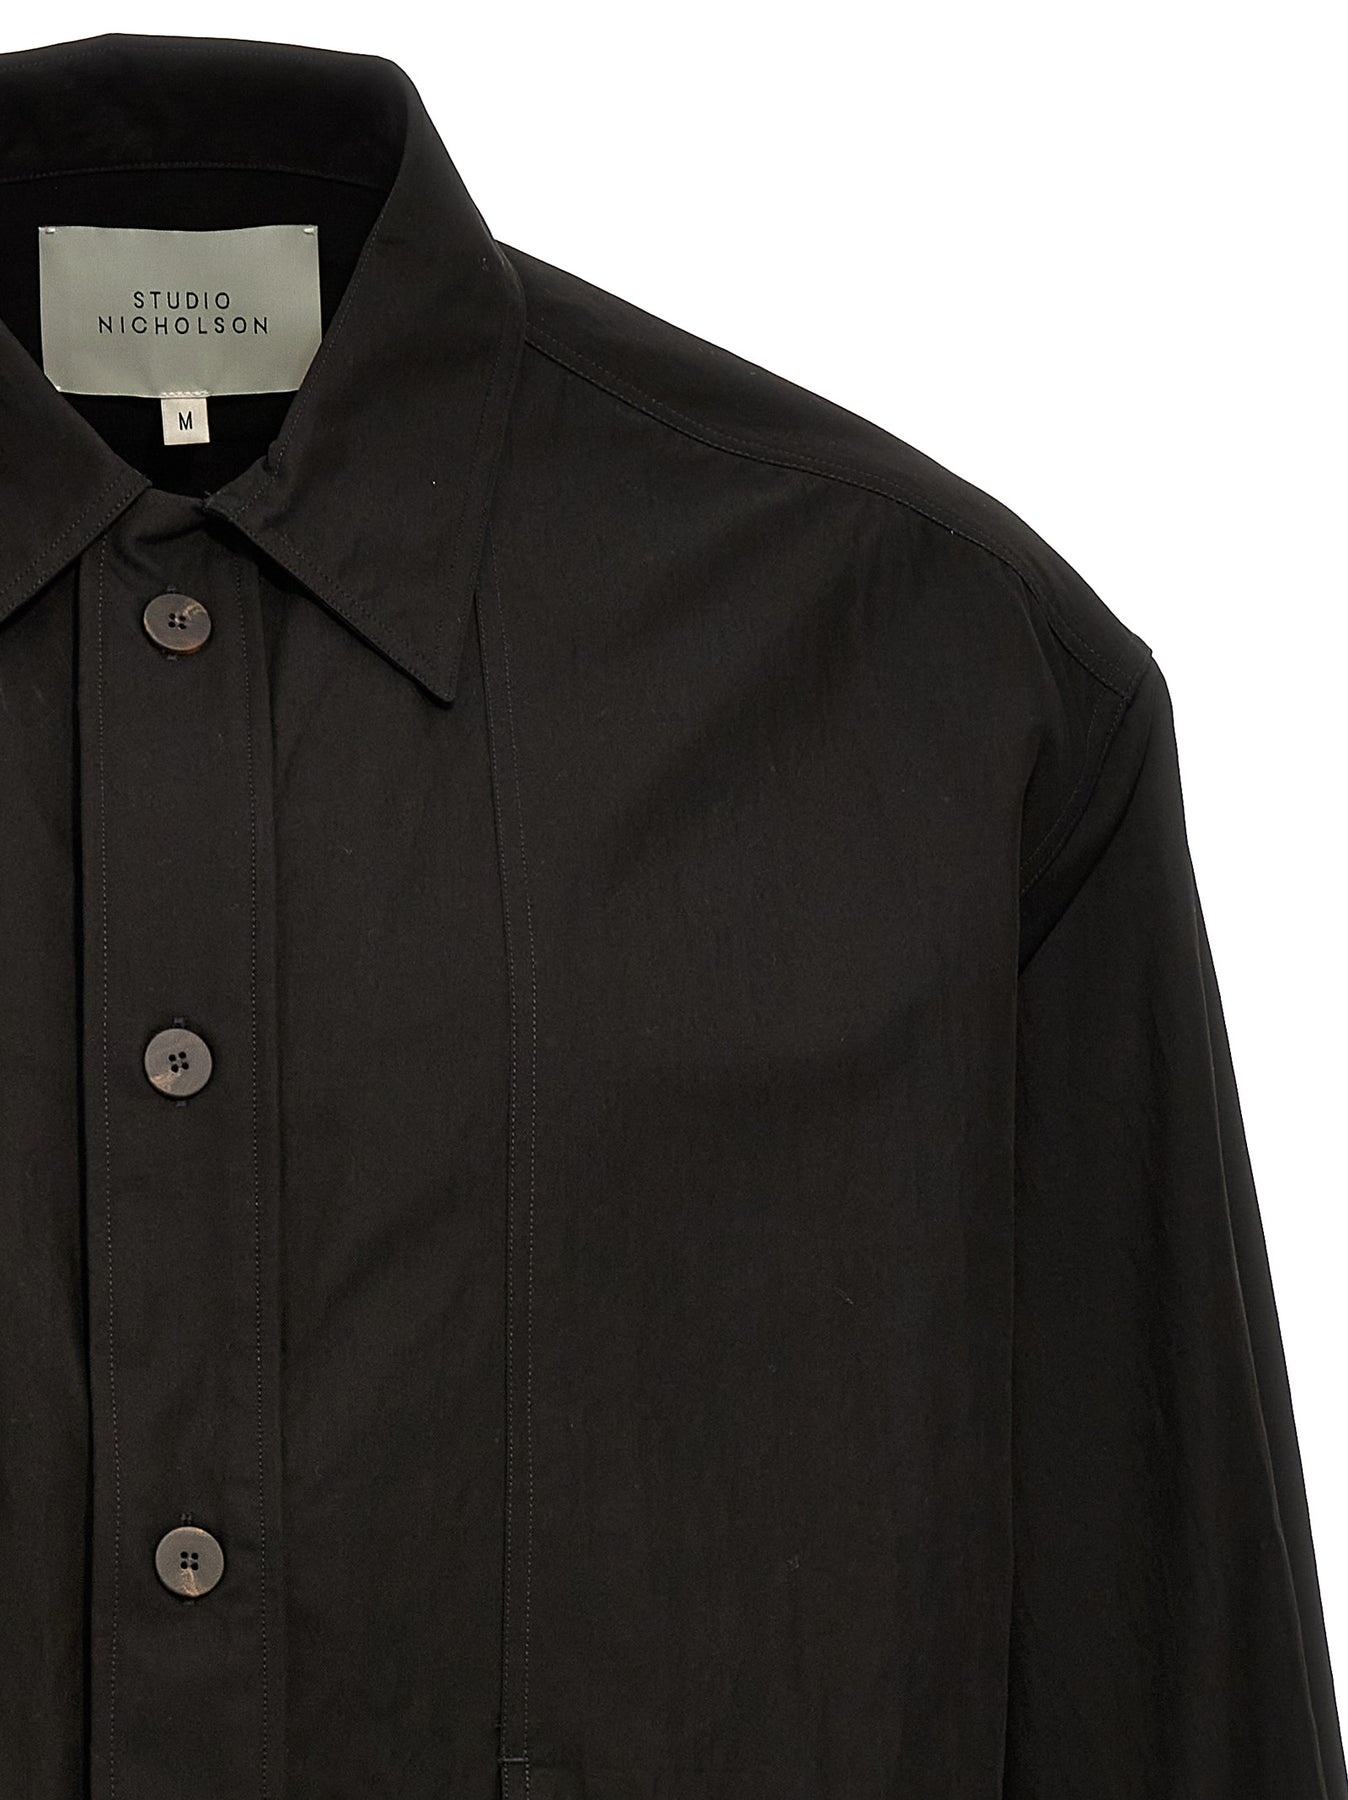 Military Shirt, Blouse Black - 3